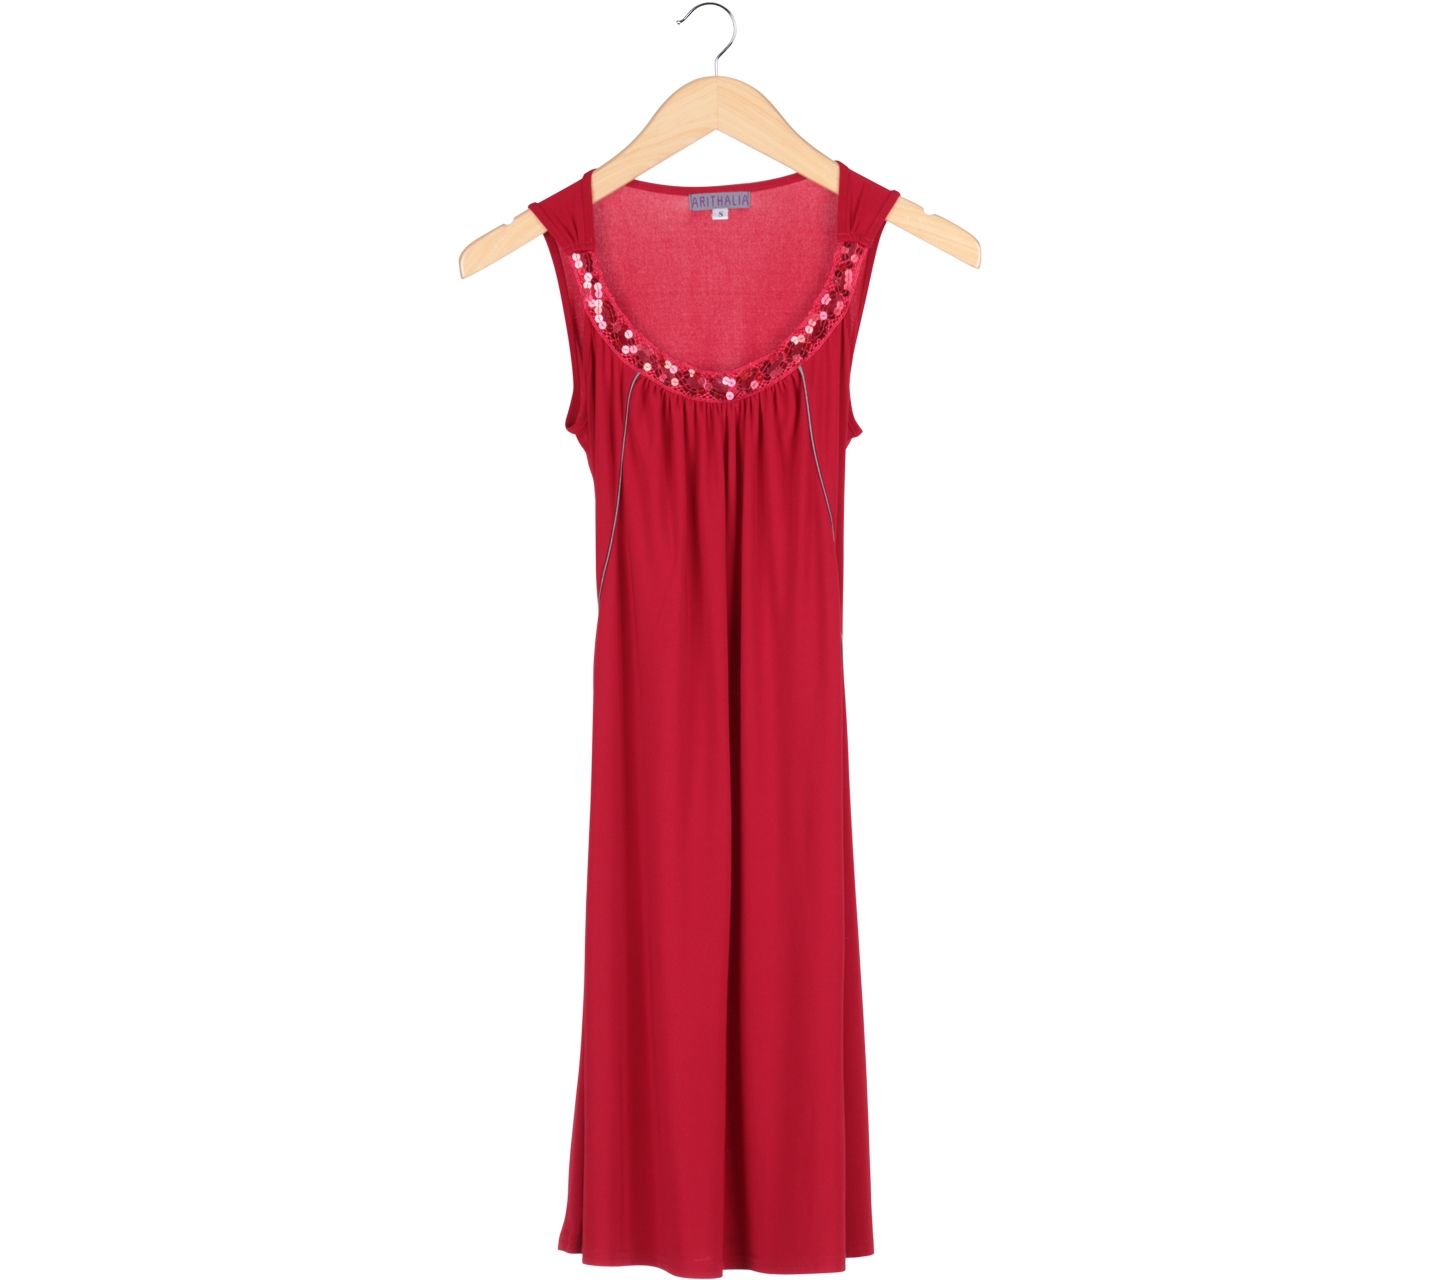 Arithalia Red Sequined Collar Sleeveless Mini Dress